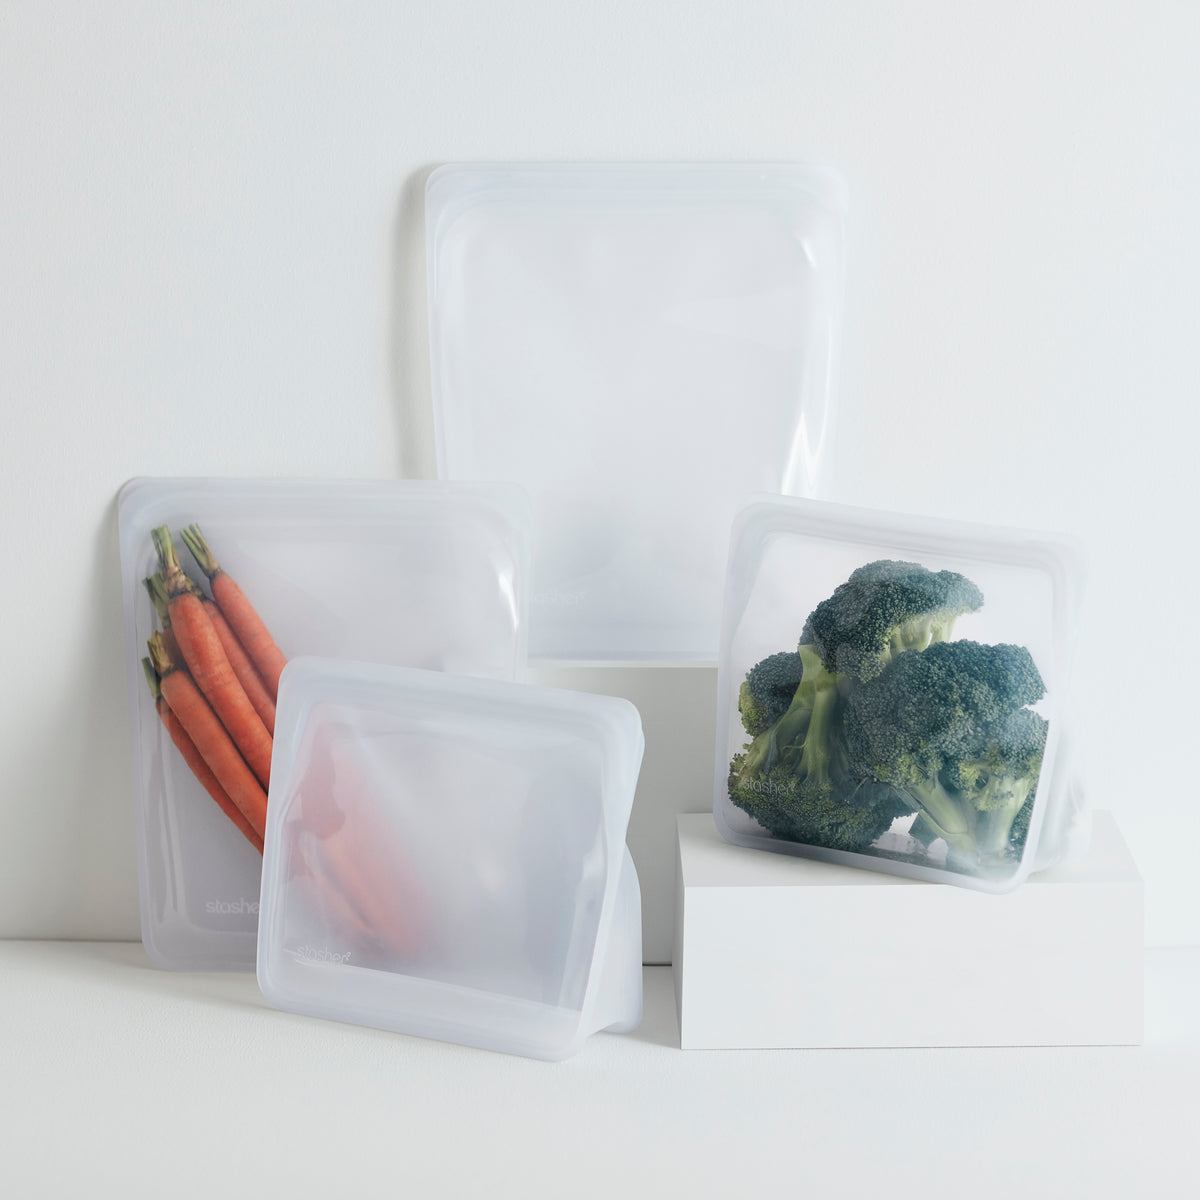 Stasher Silicone Reusable Food Storage Bags Sale 2021